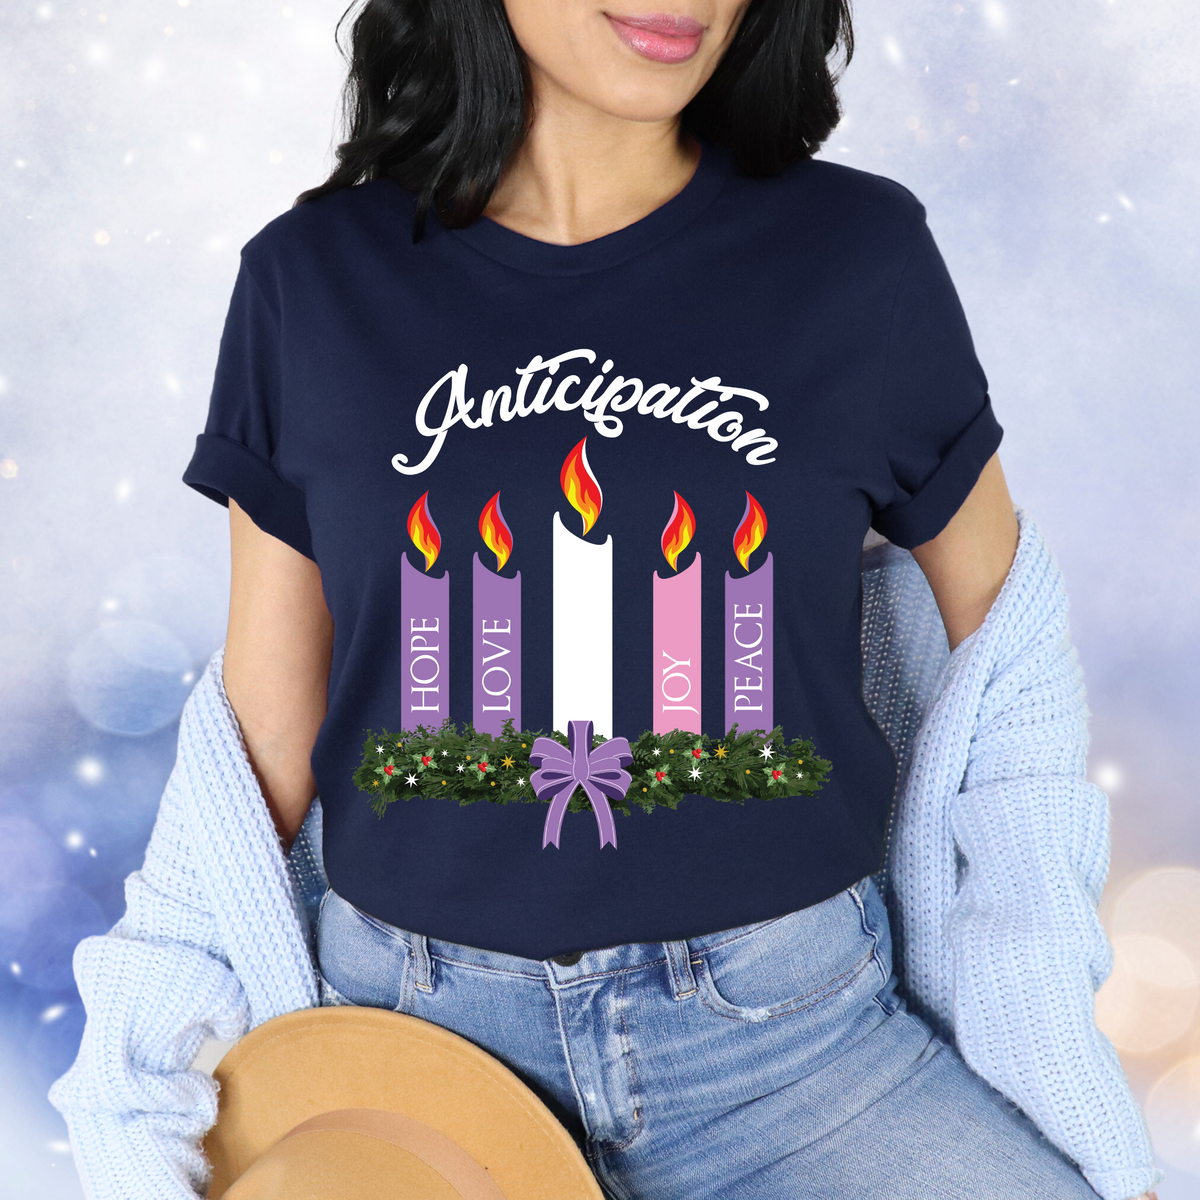 Advent Wreath Candles Christian Shirts | Navy Blue Unisex Jersey T-shirt